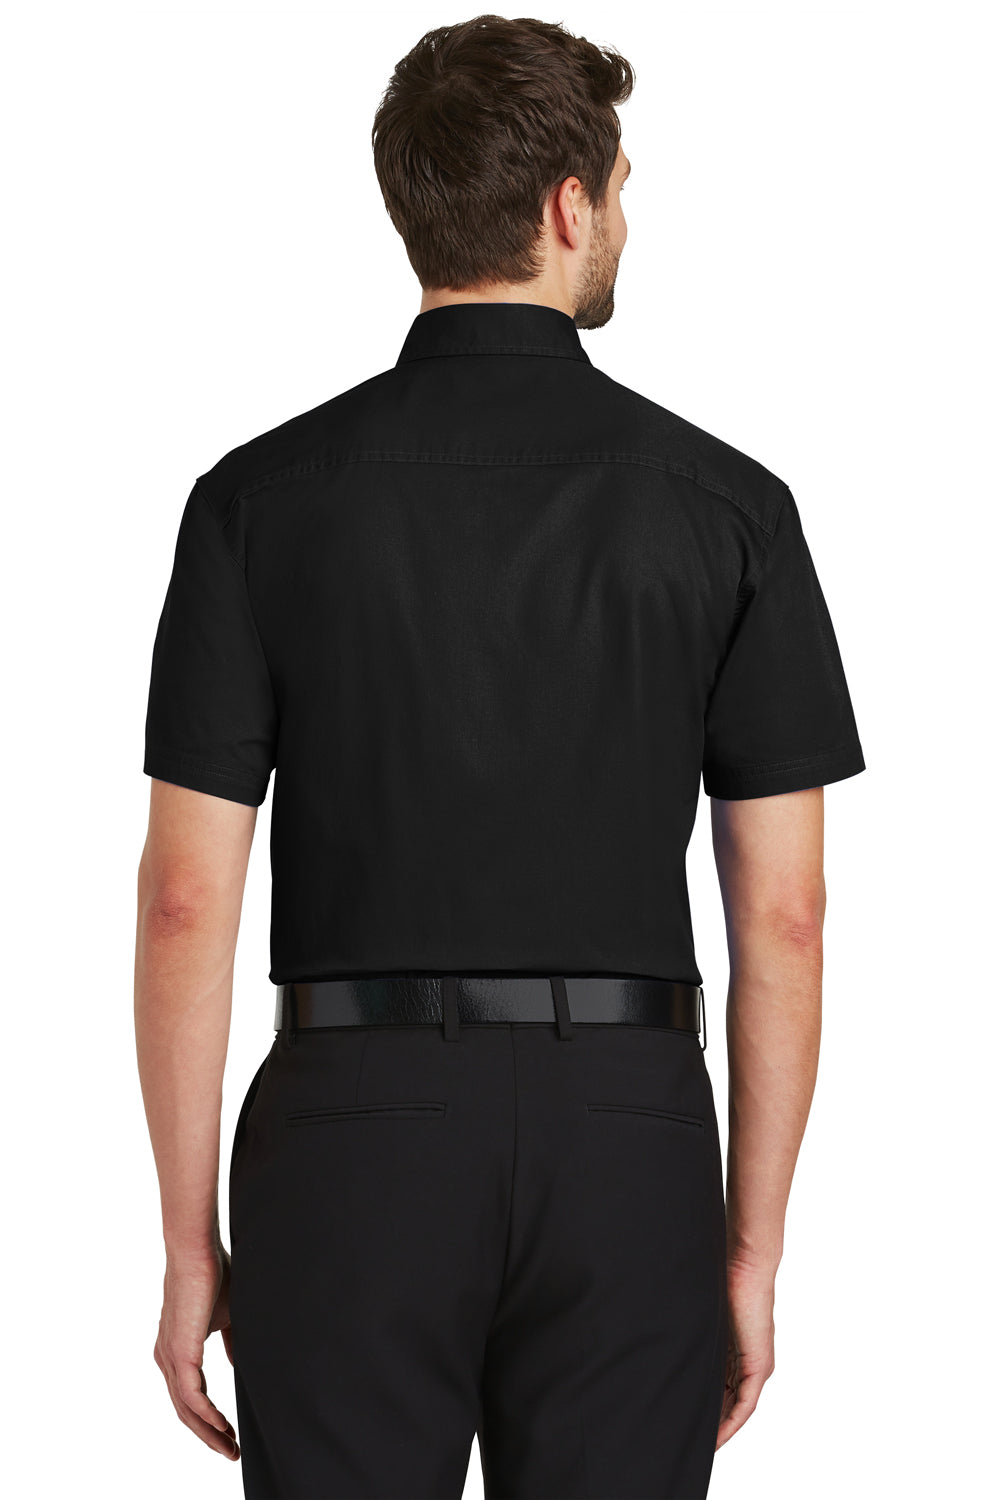 Port Authority S500T Mens Short Sleeve Button Down Shirt w/ Pocket Black Back